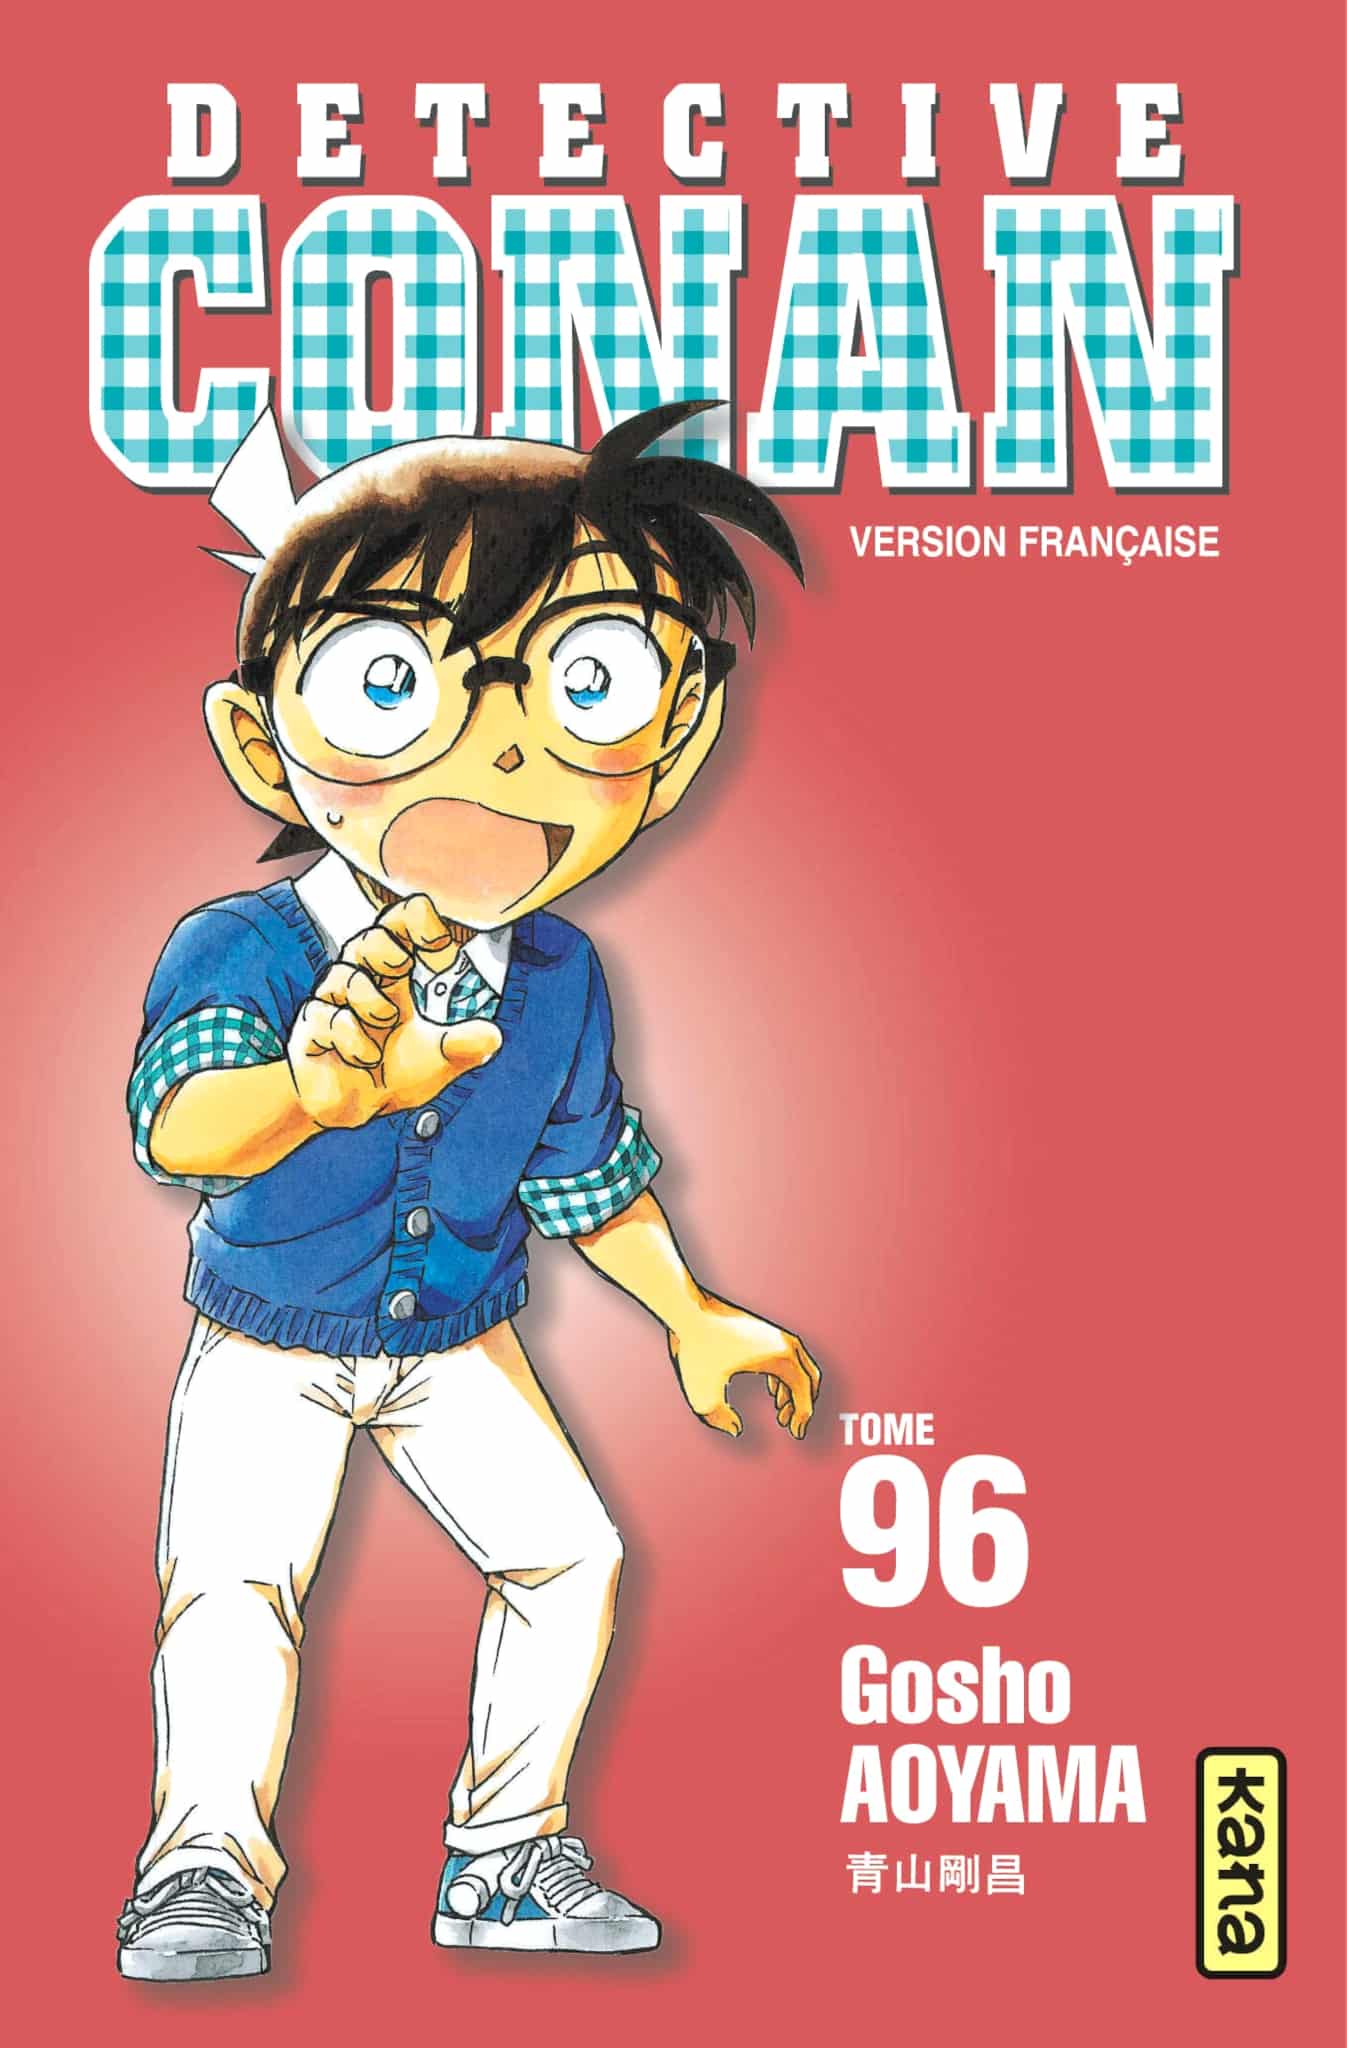 Tome 96 du manga Detective Conan